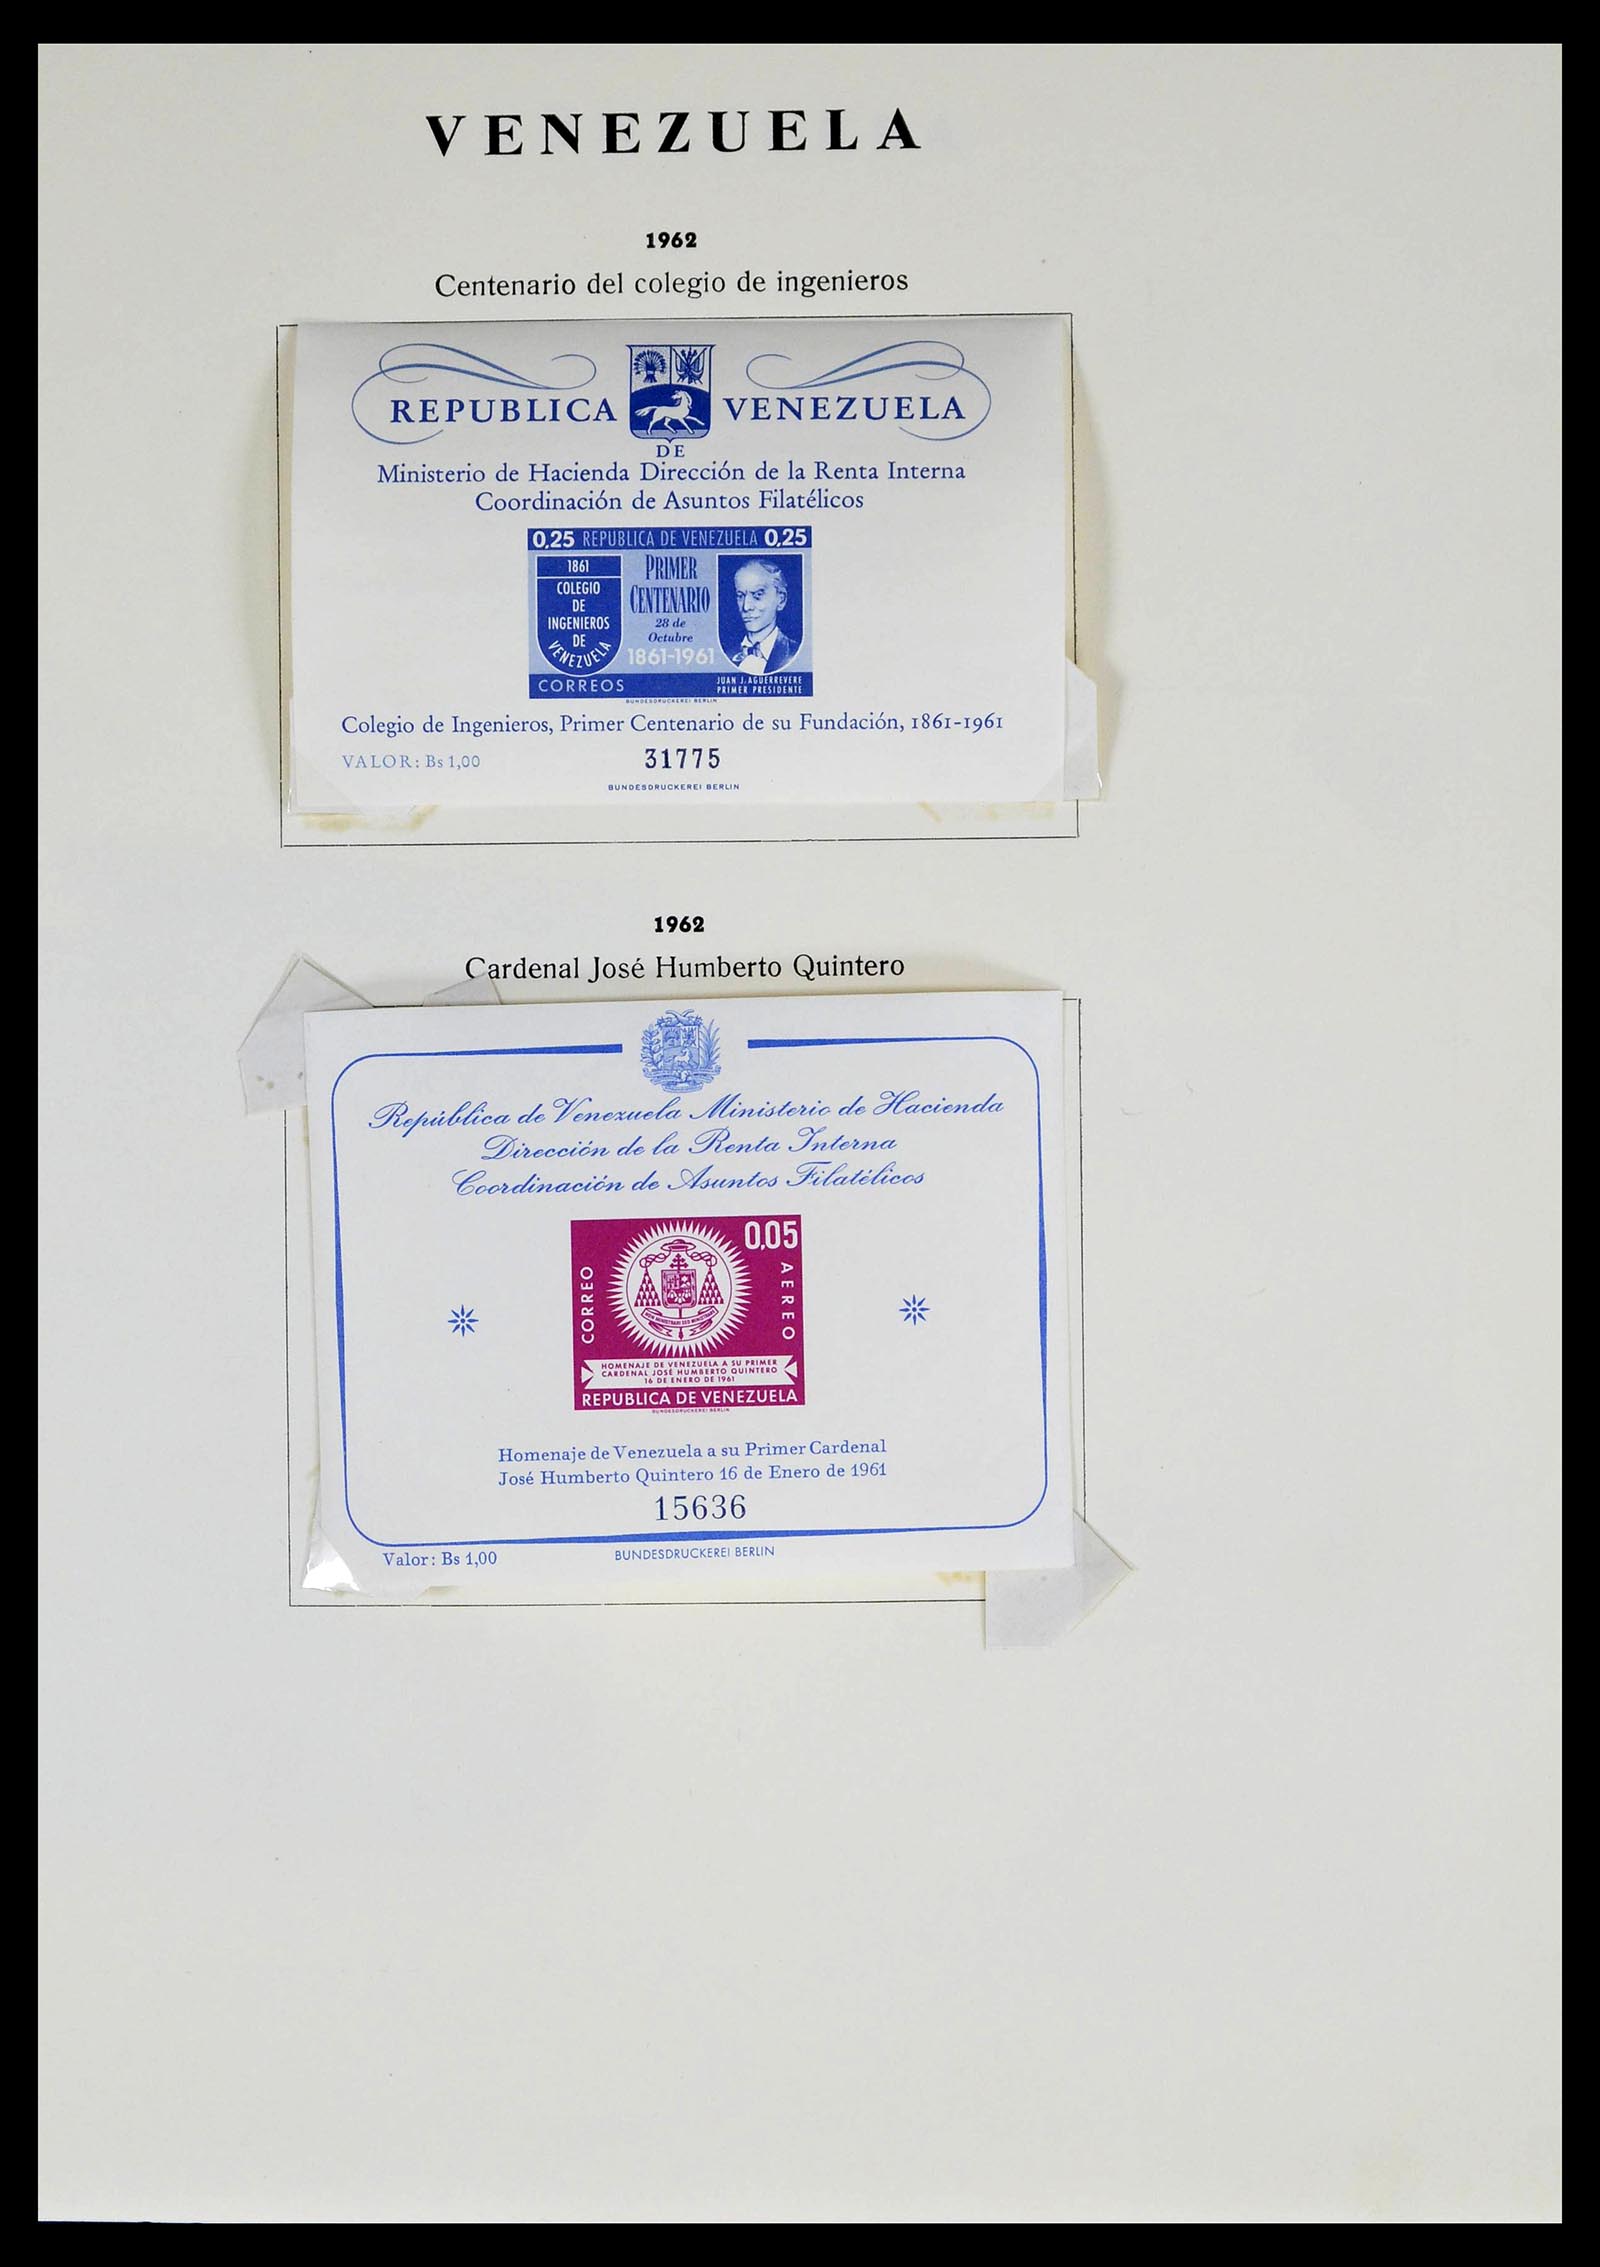 39223 0169 - Stamp collection 39223 Venezuela 1859-1984.